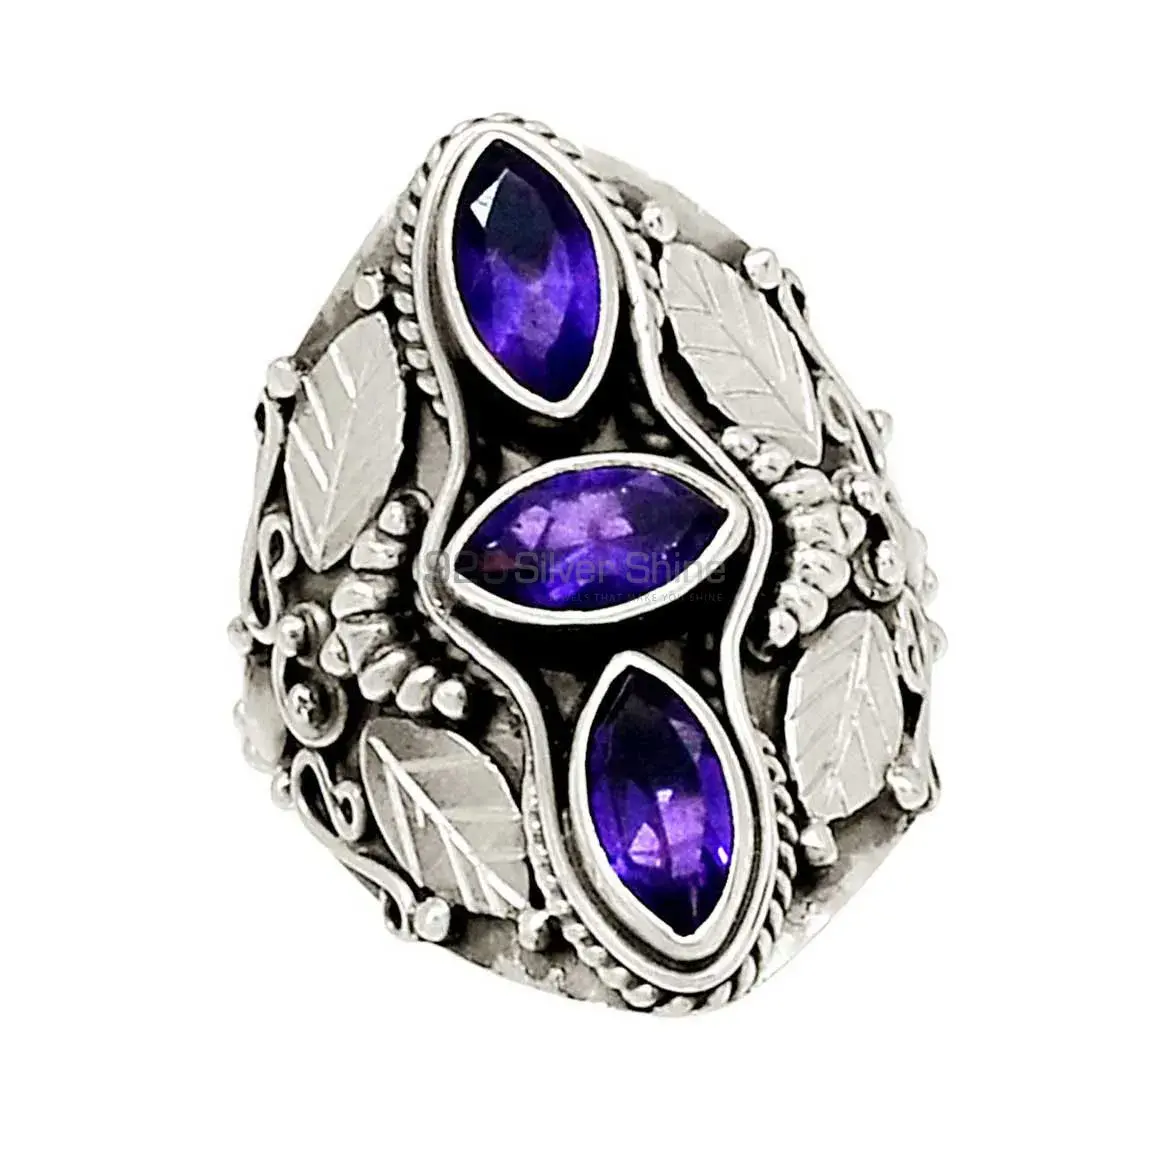 Semi Precious Amethyst Gemstone Handmade Ring In Sterling Silver Jewelry 925SR2384_0